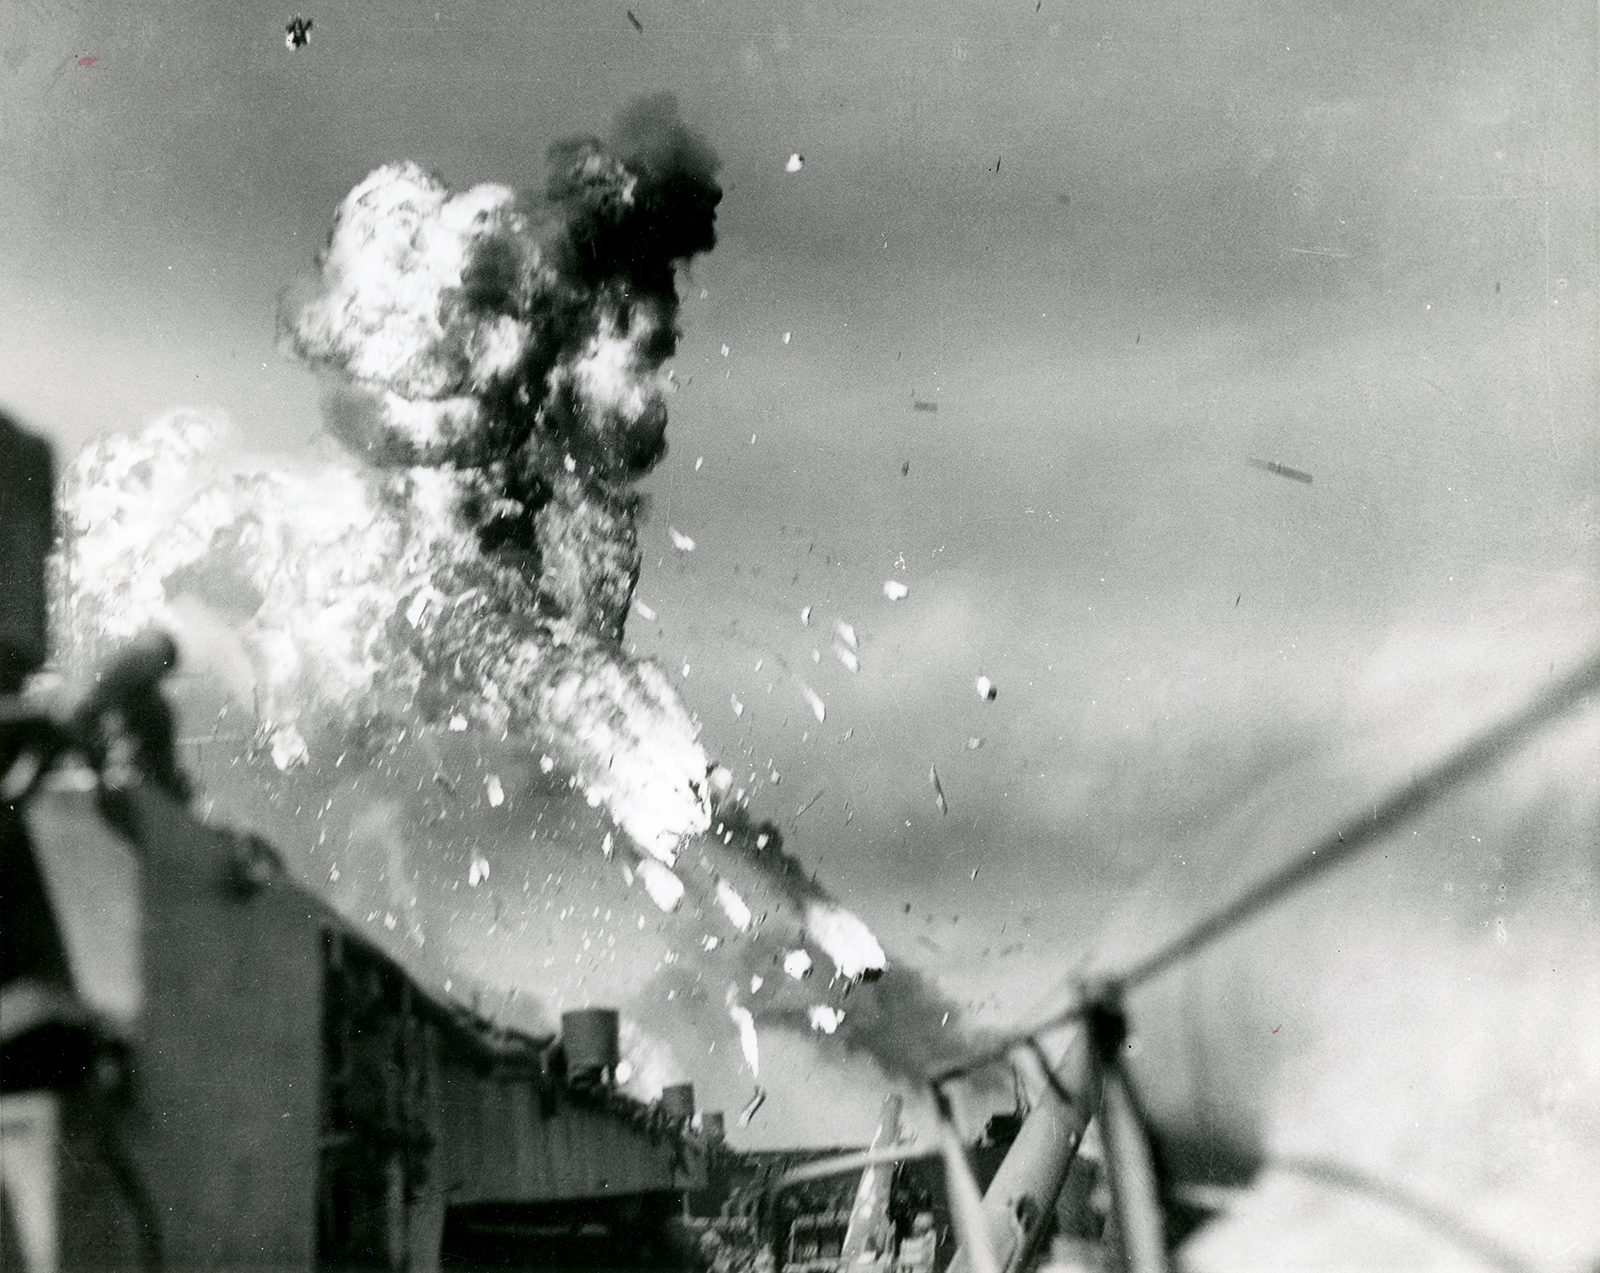 Japanese kamikaze pilot attacks naval warship resulting in explosive damage